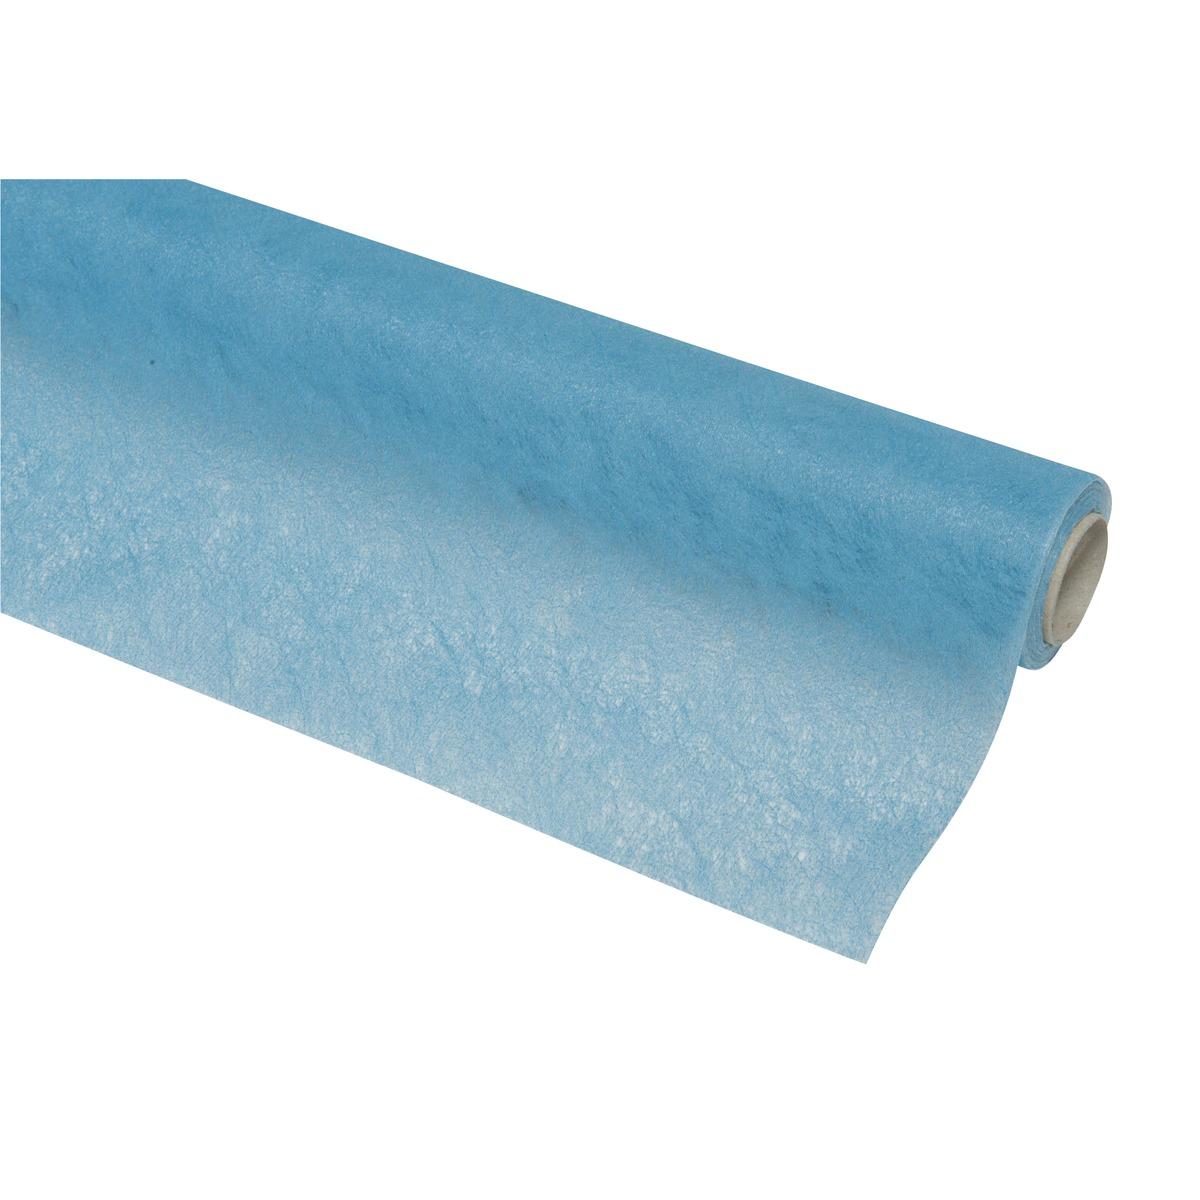 Chemin de table non tissé - 4,8 x 0,4 m - Intissé (soft) - Bleu